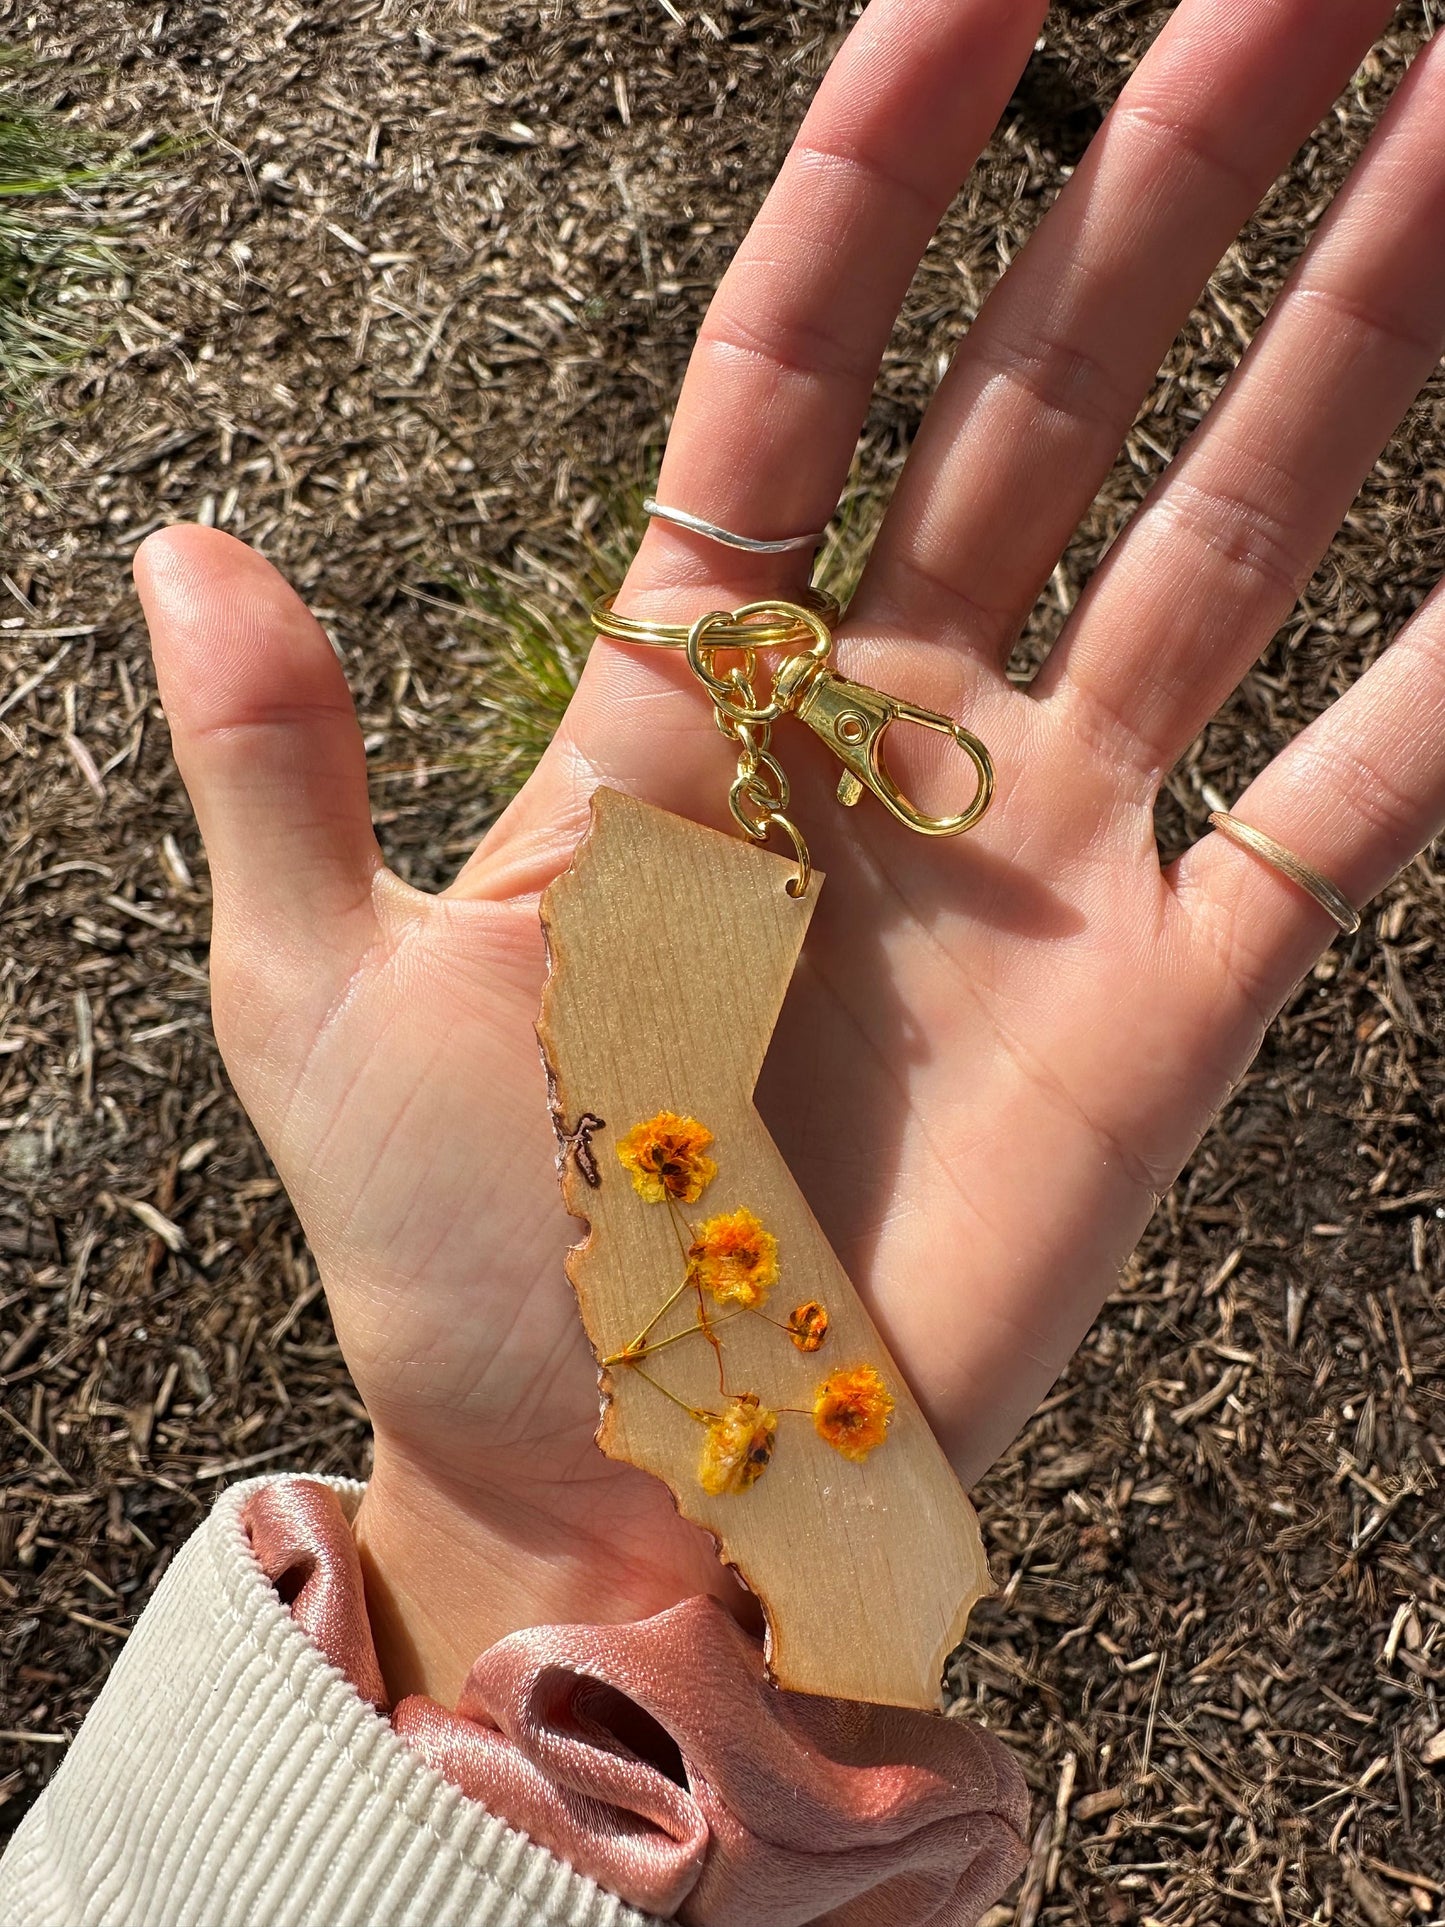 California flower keychain or magnet